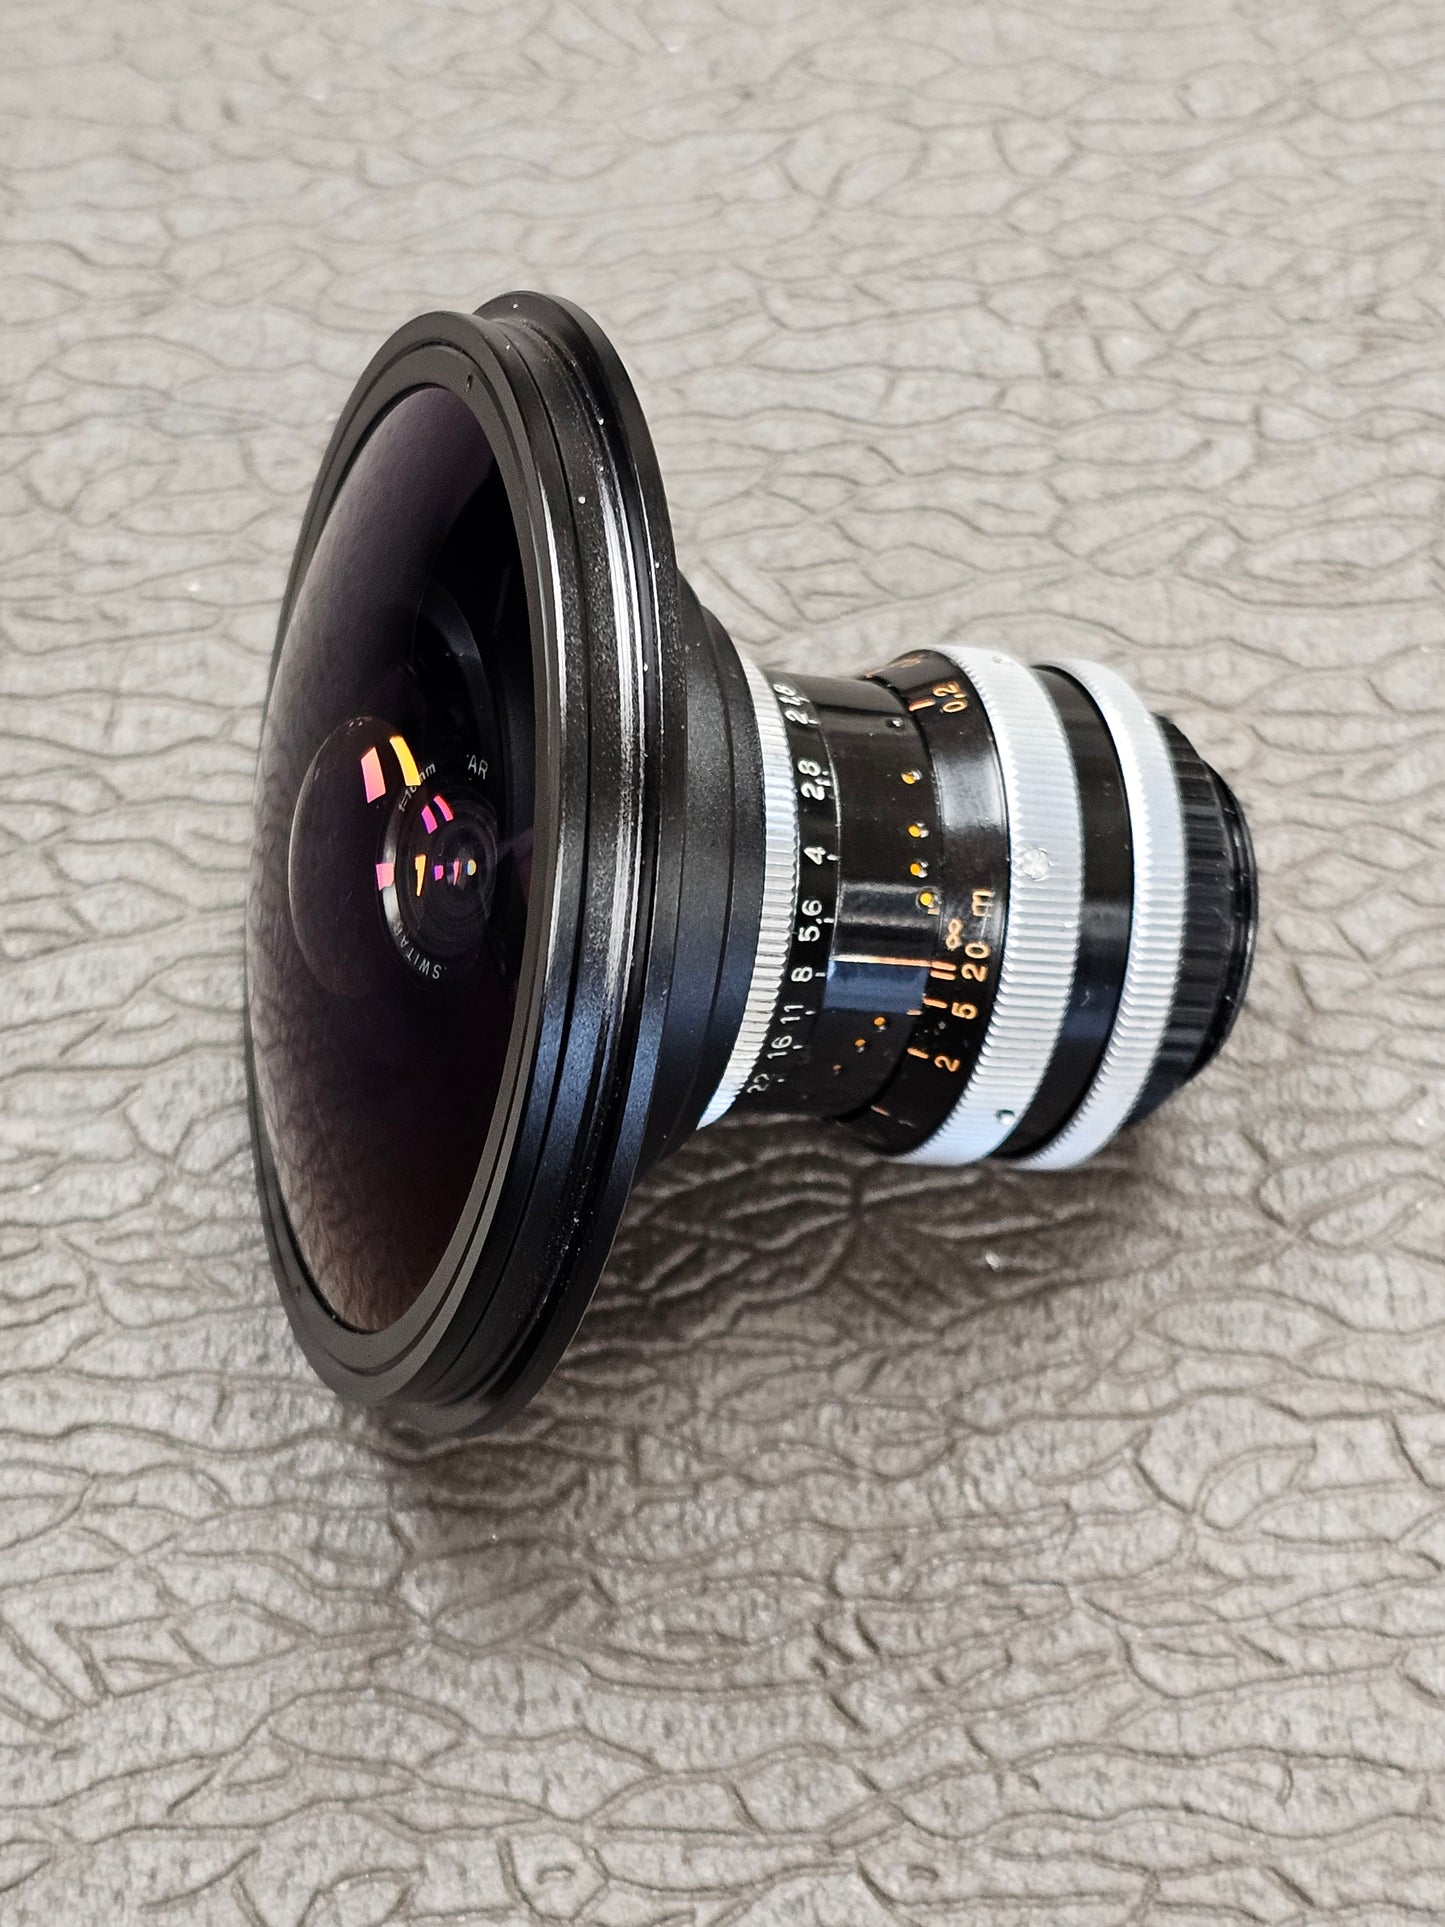 Super Fisheye 4.5mm Lens Attachment for Switar 16mm